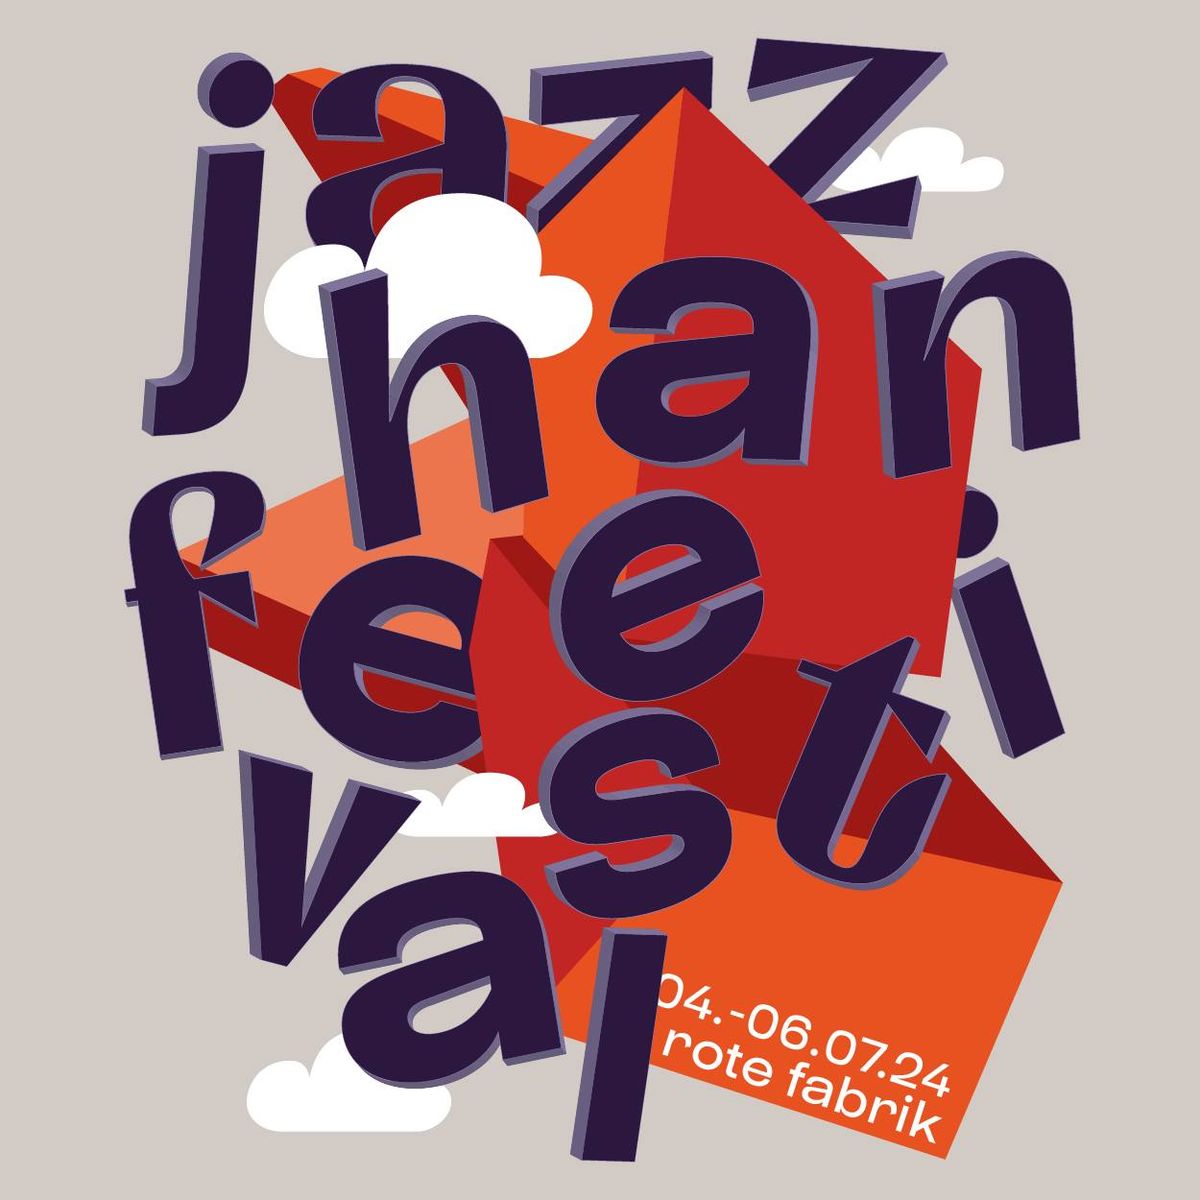 jazzhane festival